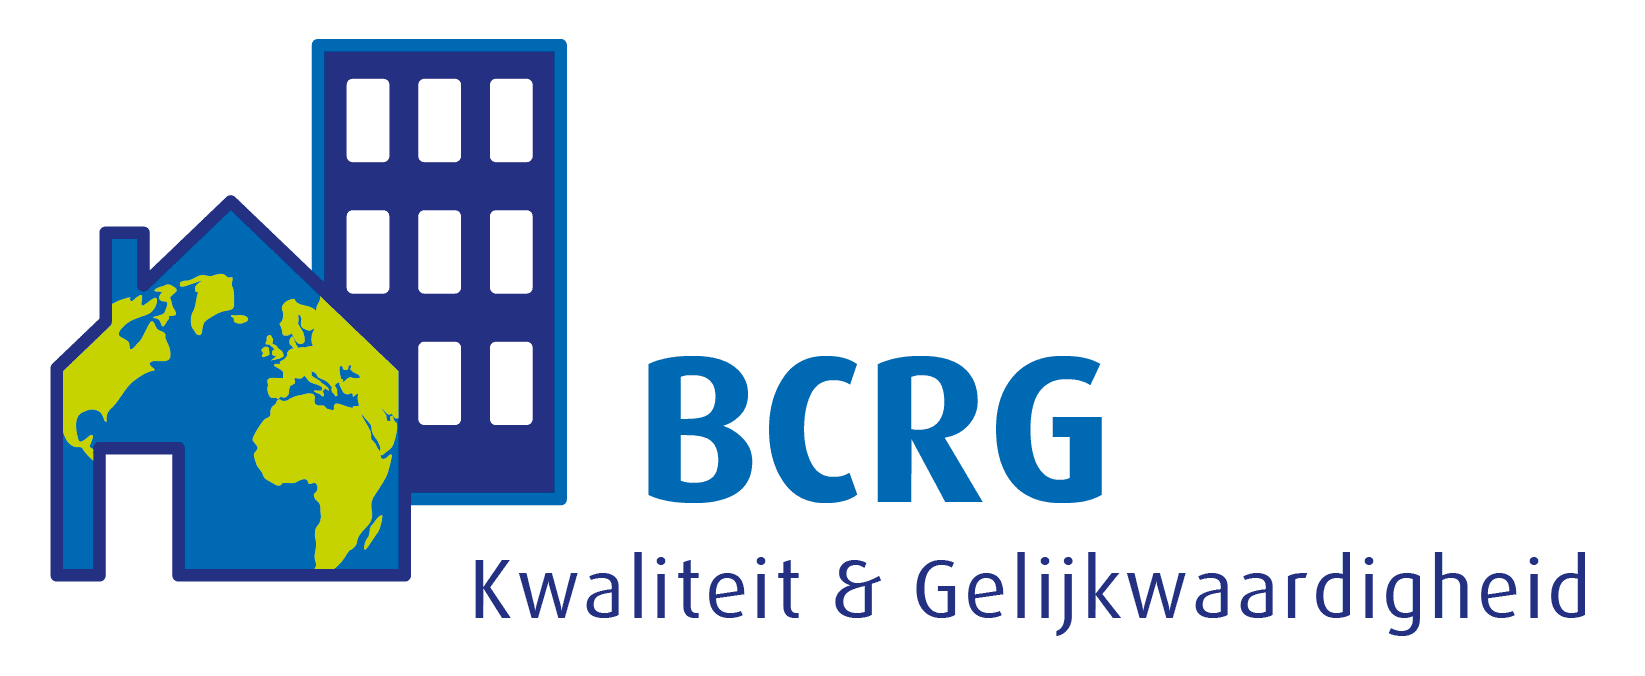 Logo BCRG Kwaliteit & gelijkwaardigheid